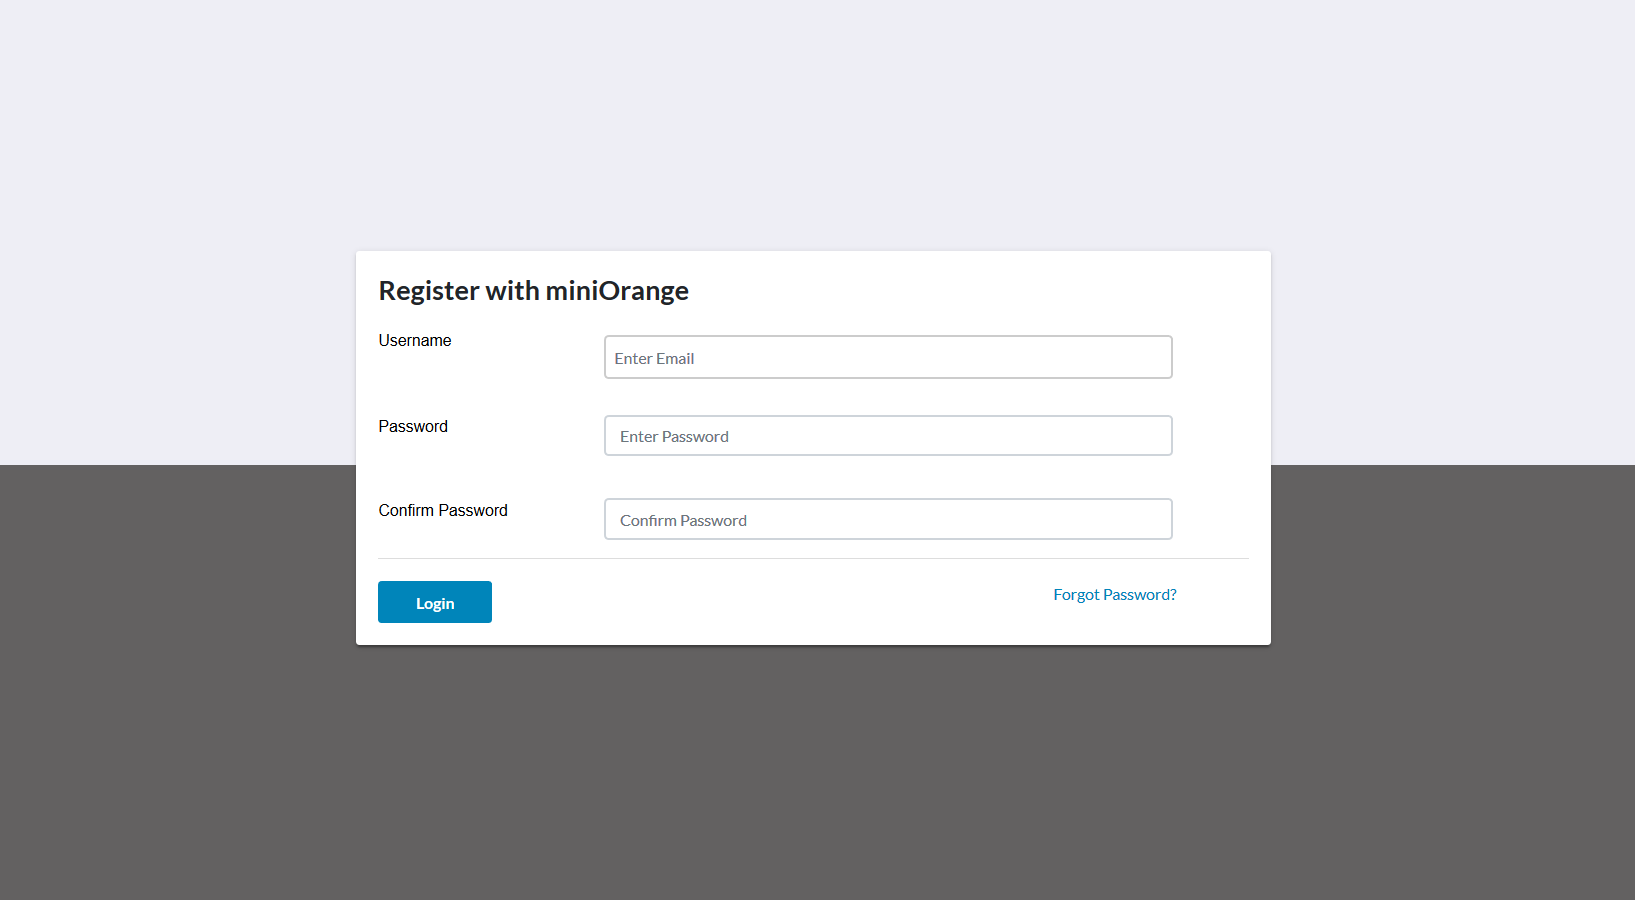 ASP.NET OneLogin OAuth SSO -register with miniorange